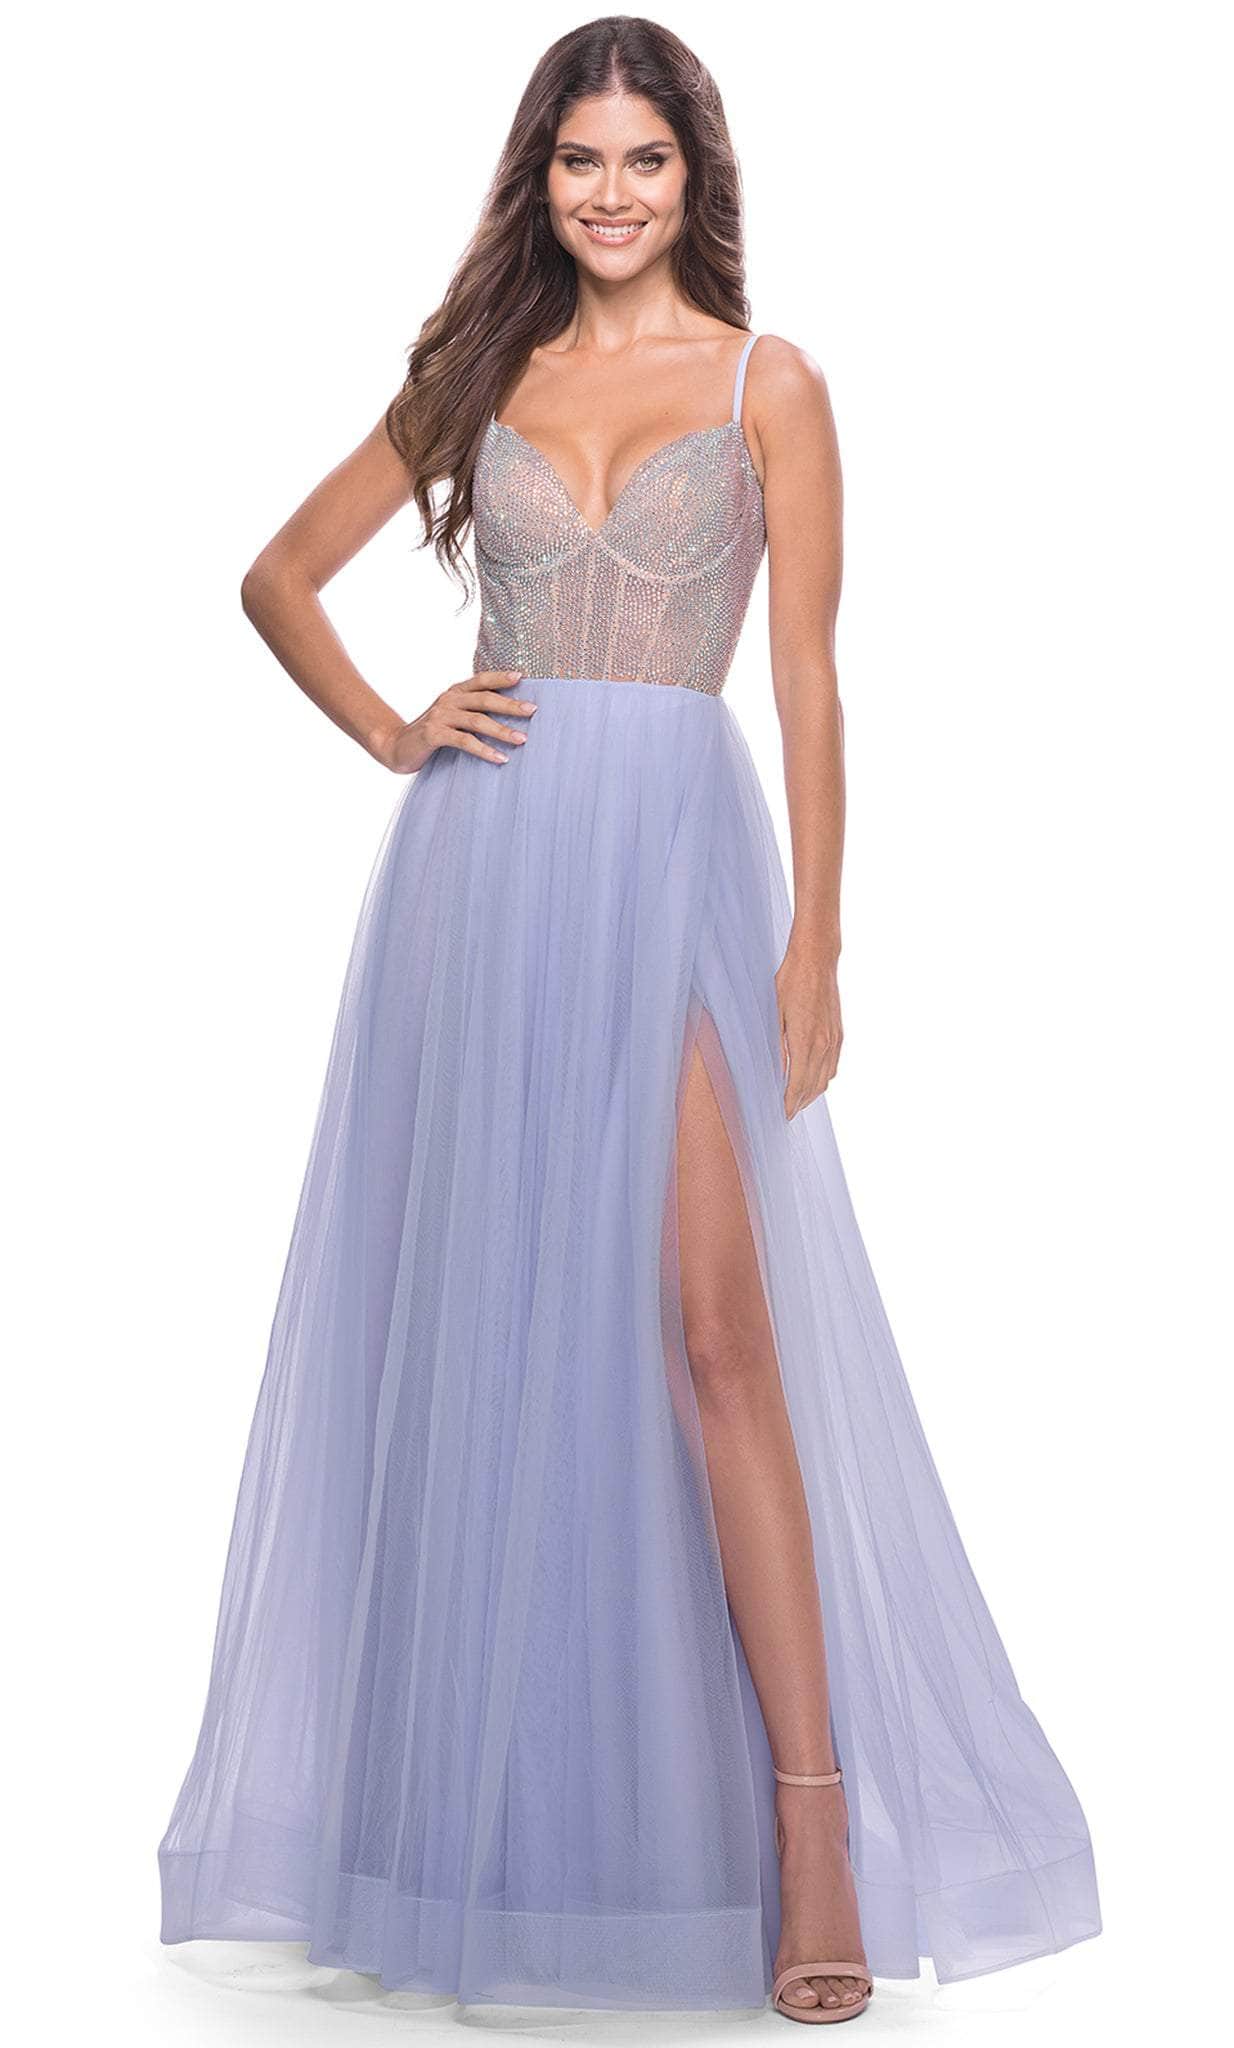 Image of La Femme 31578 - Sweetheart Embellished Long Classic Prom Dress